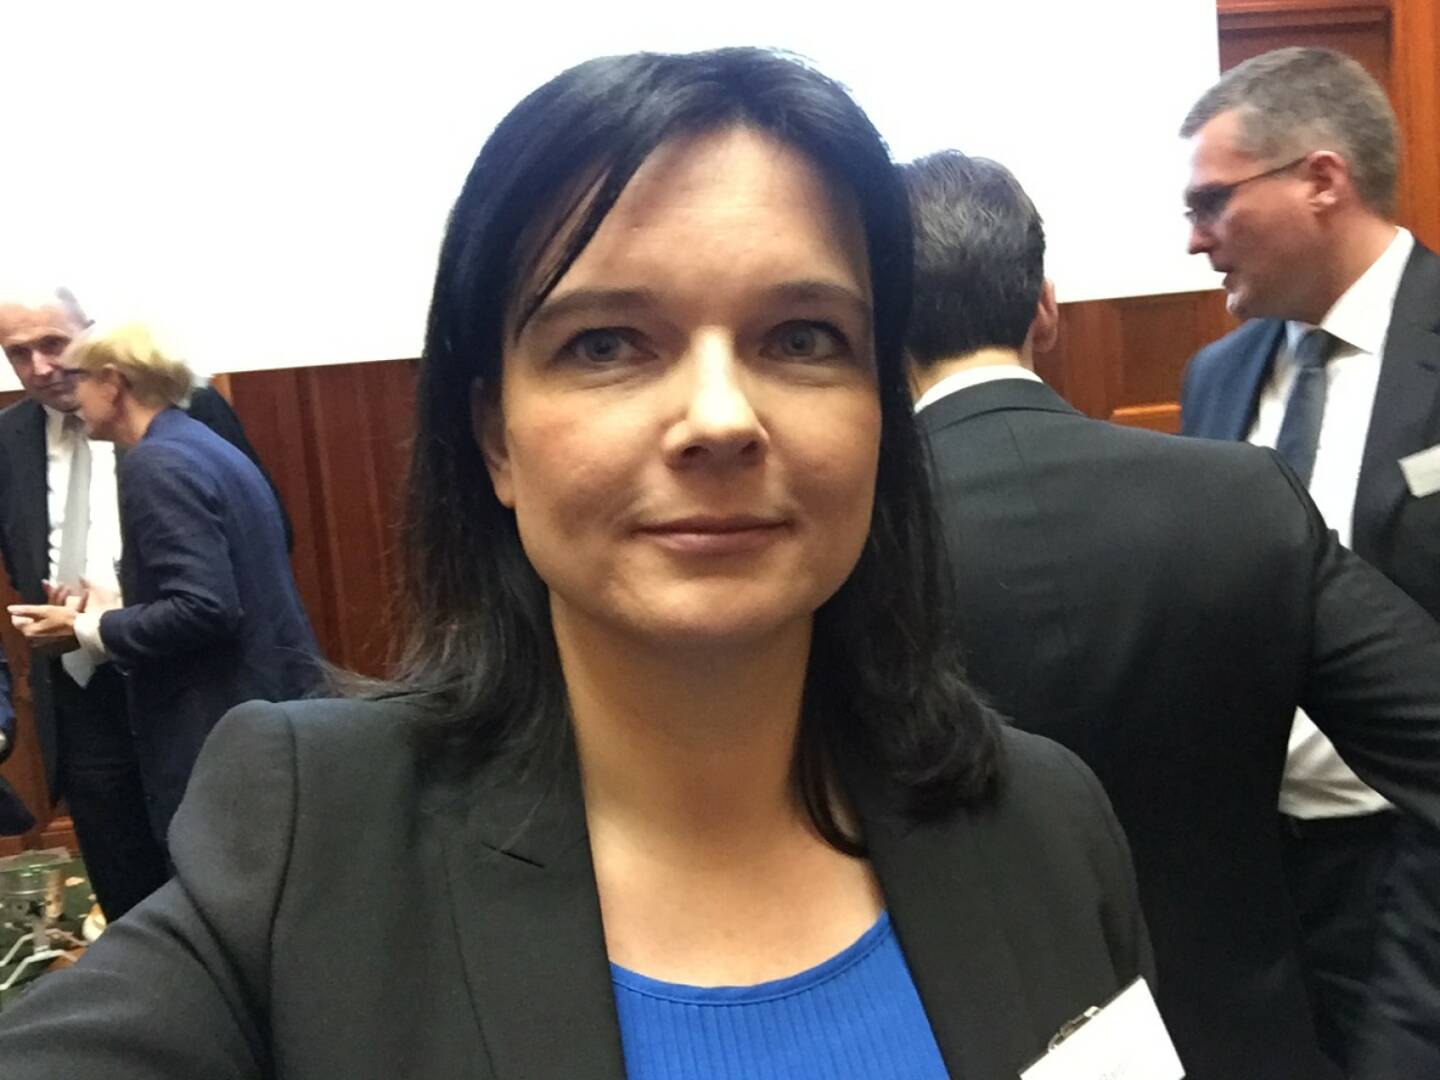 Claudia Barth Selfie, UniCredit